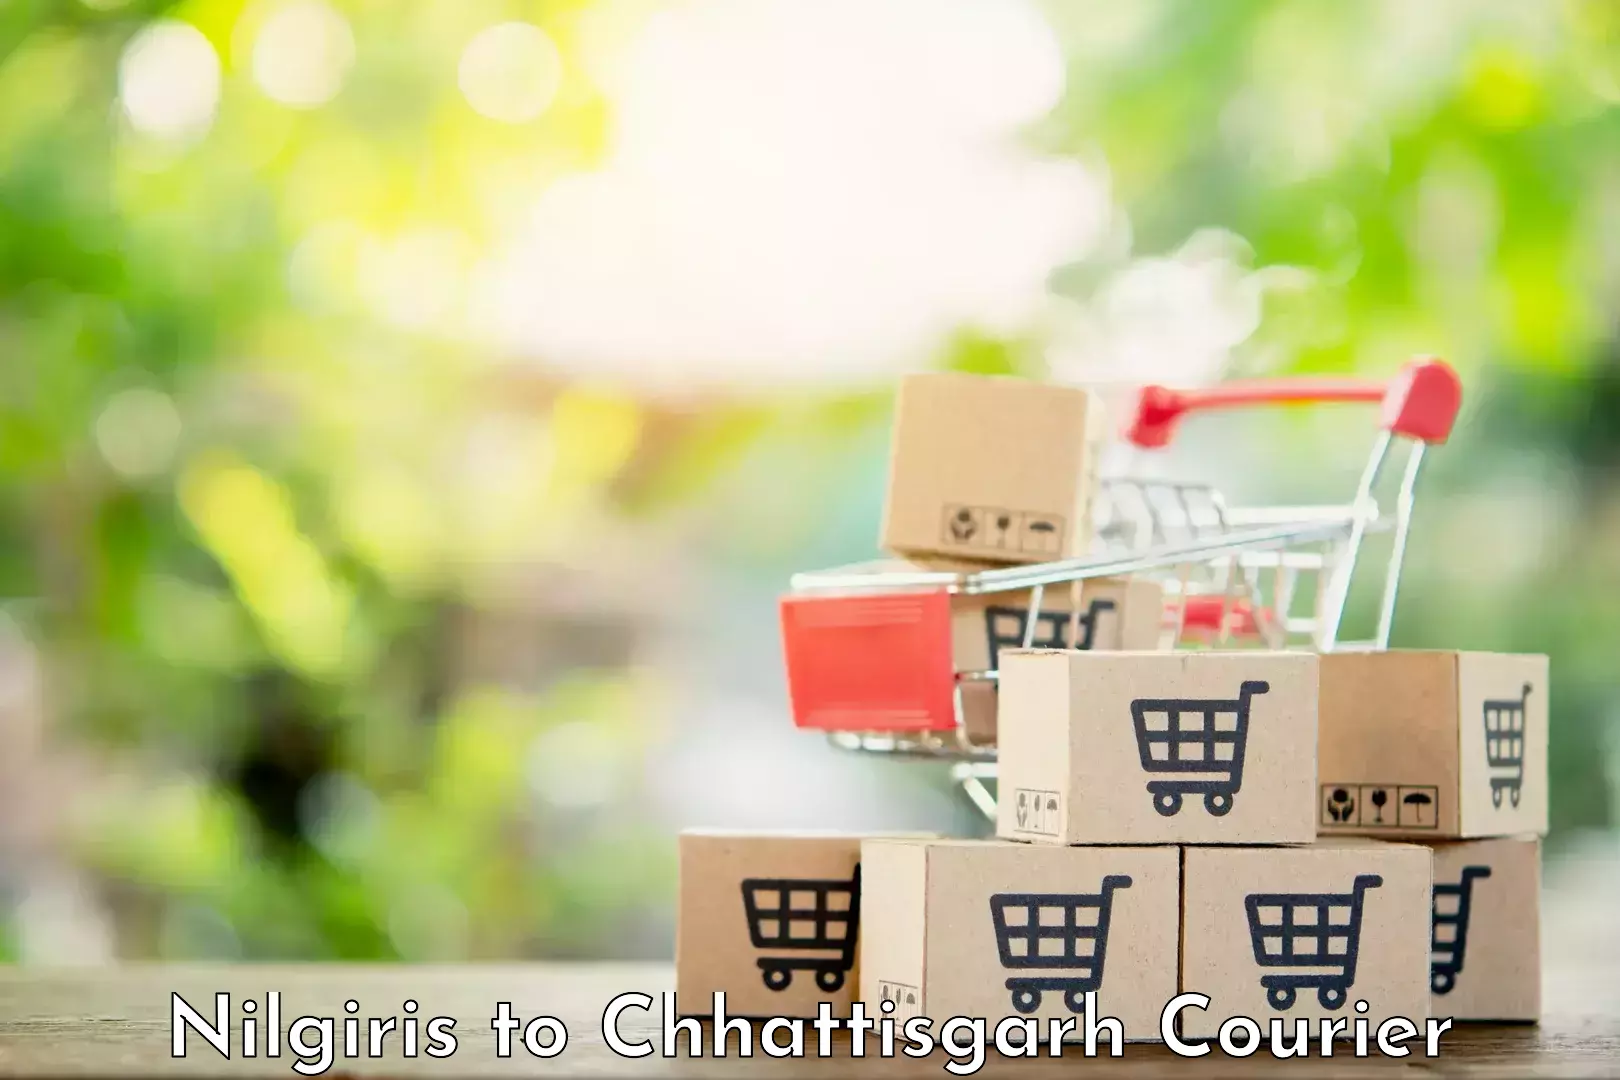 Multi-city courier Nilgiris to Chhattisgarh